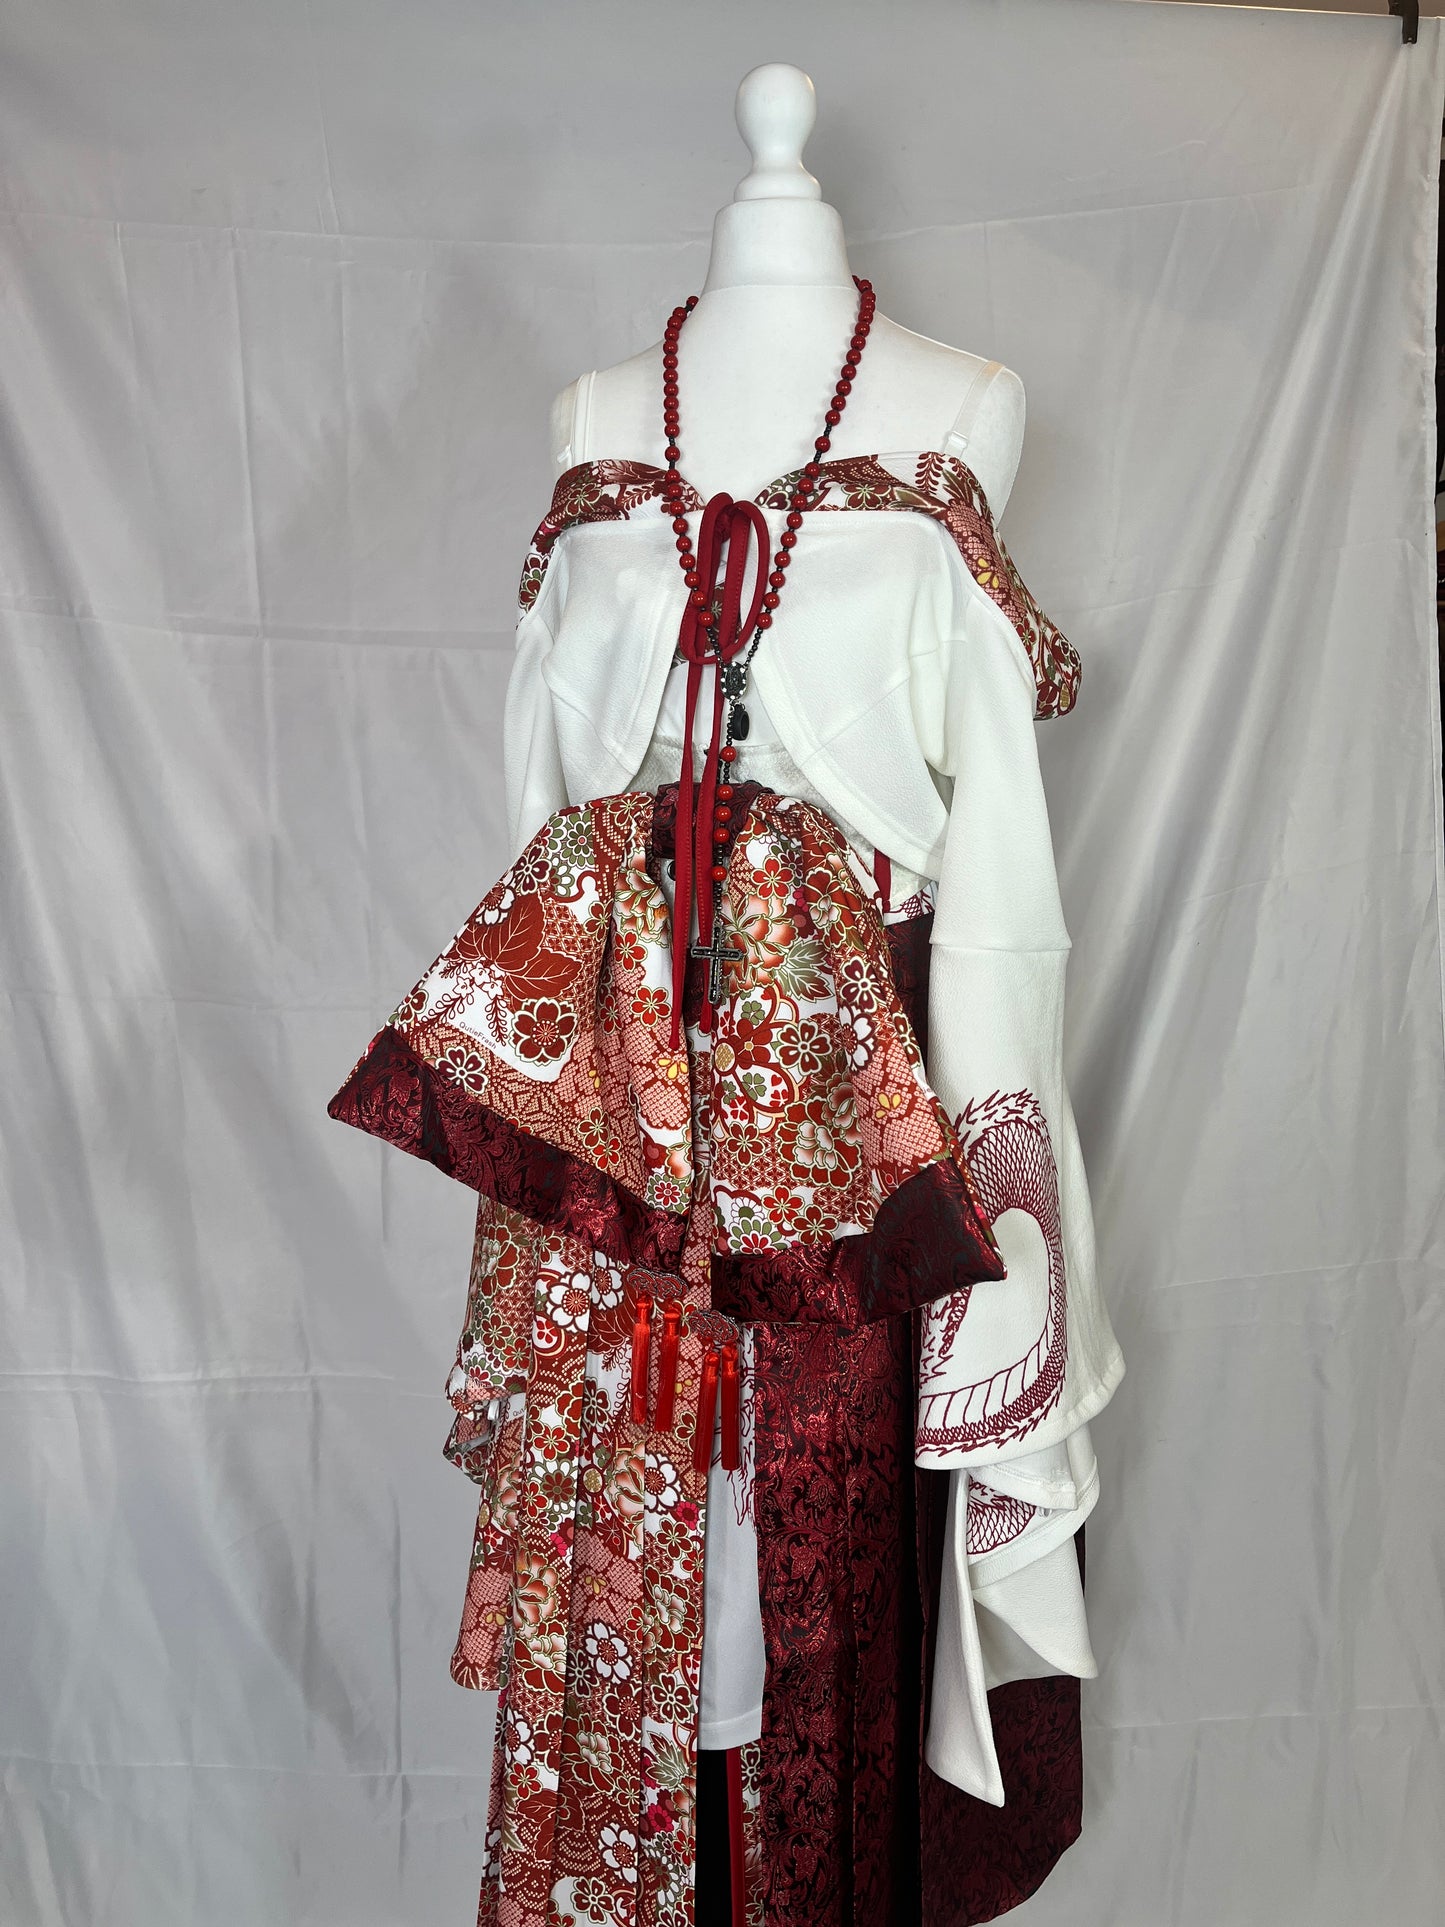 Qutie Frash Red Floral Kimono 5P Set